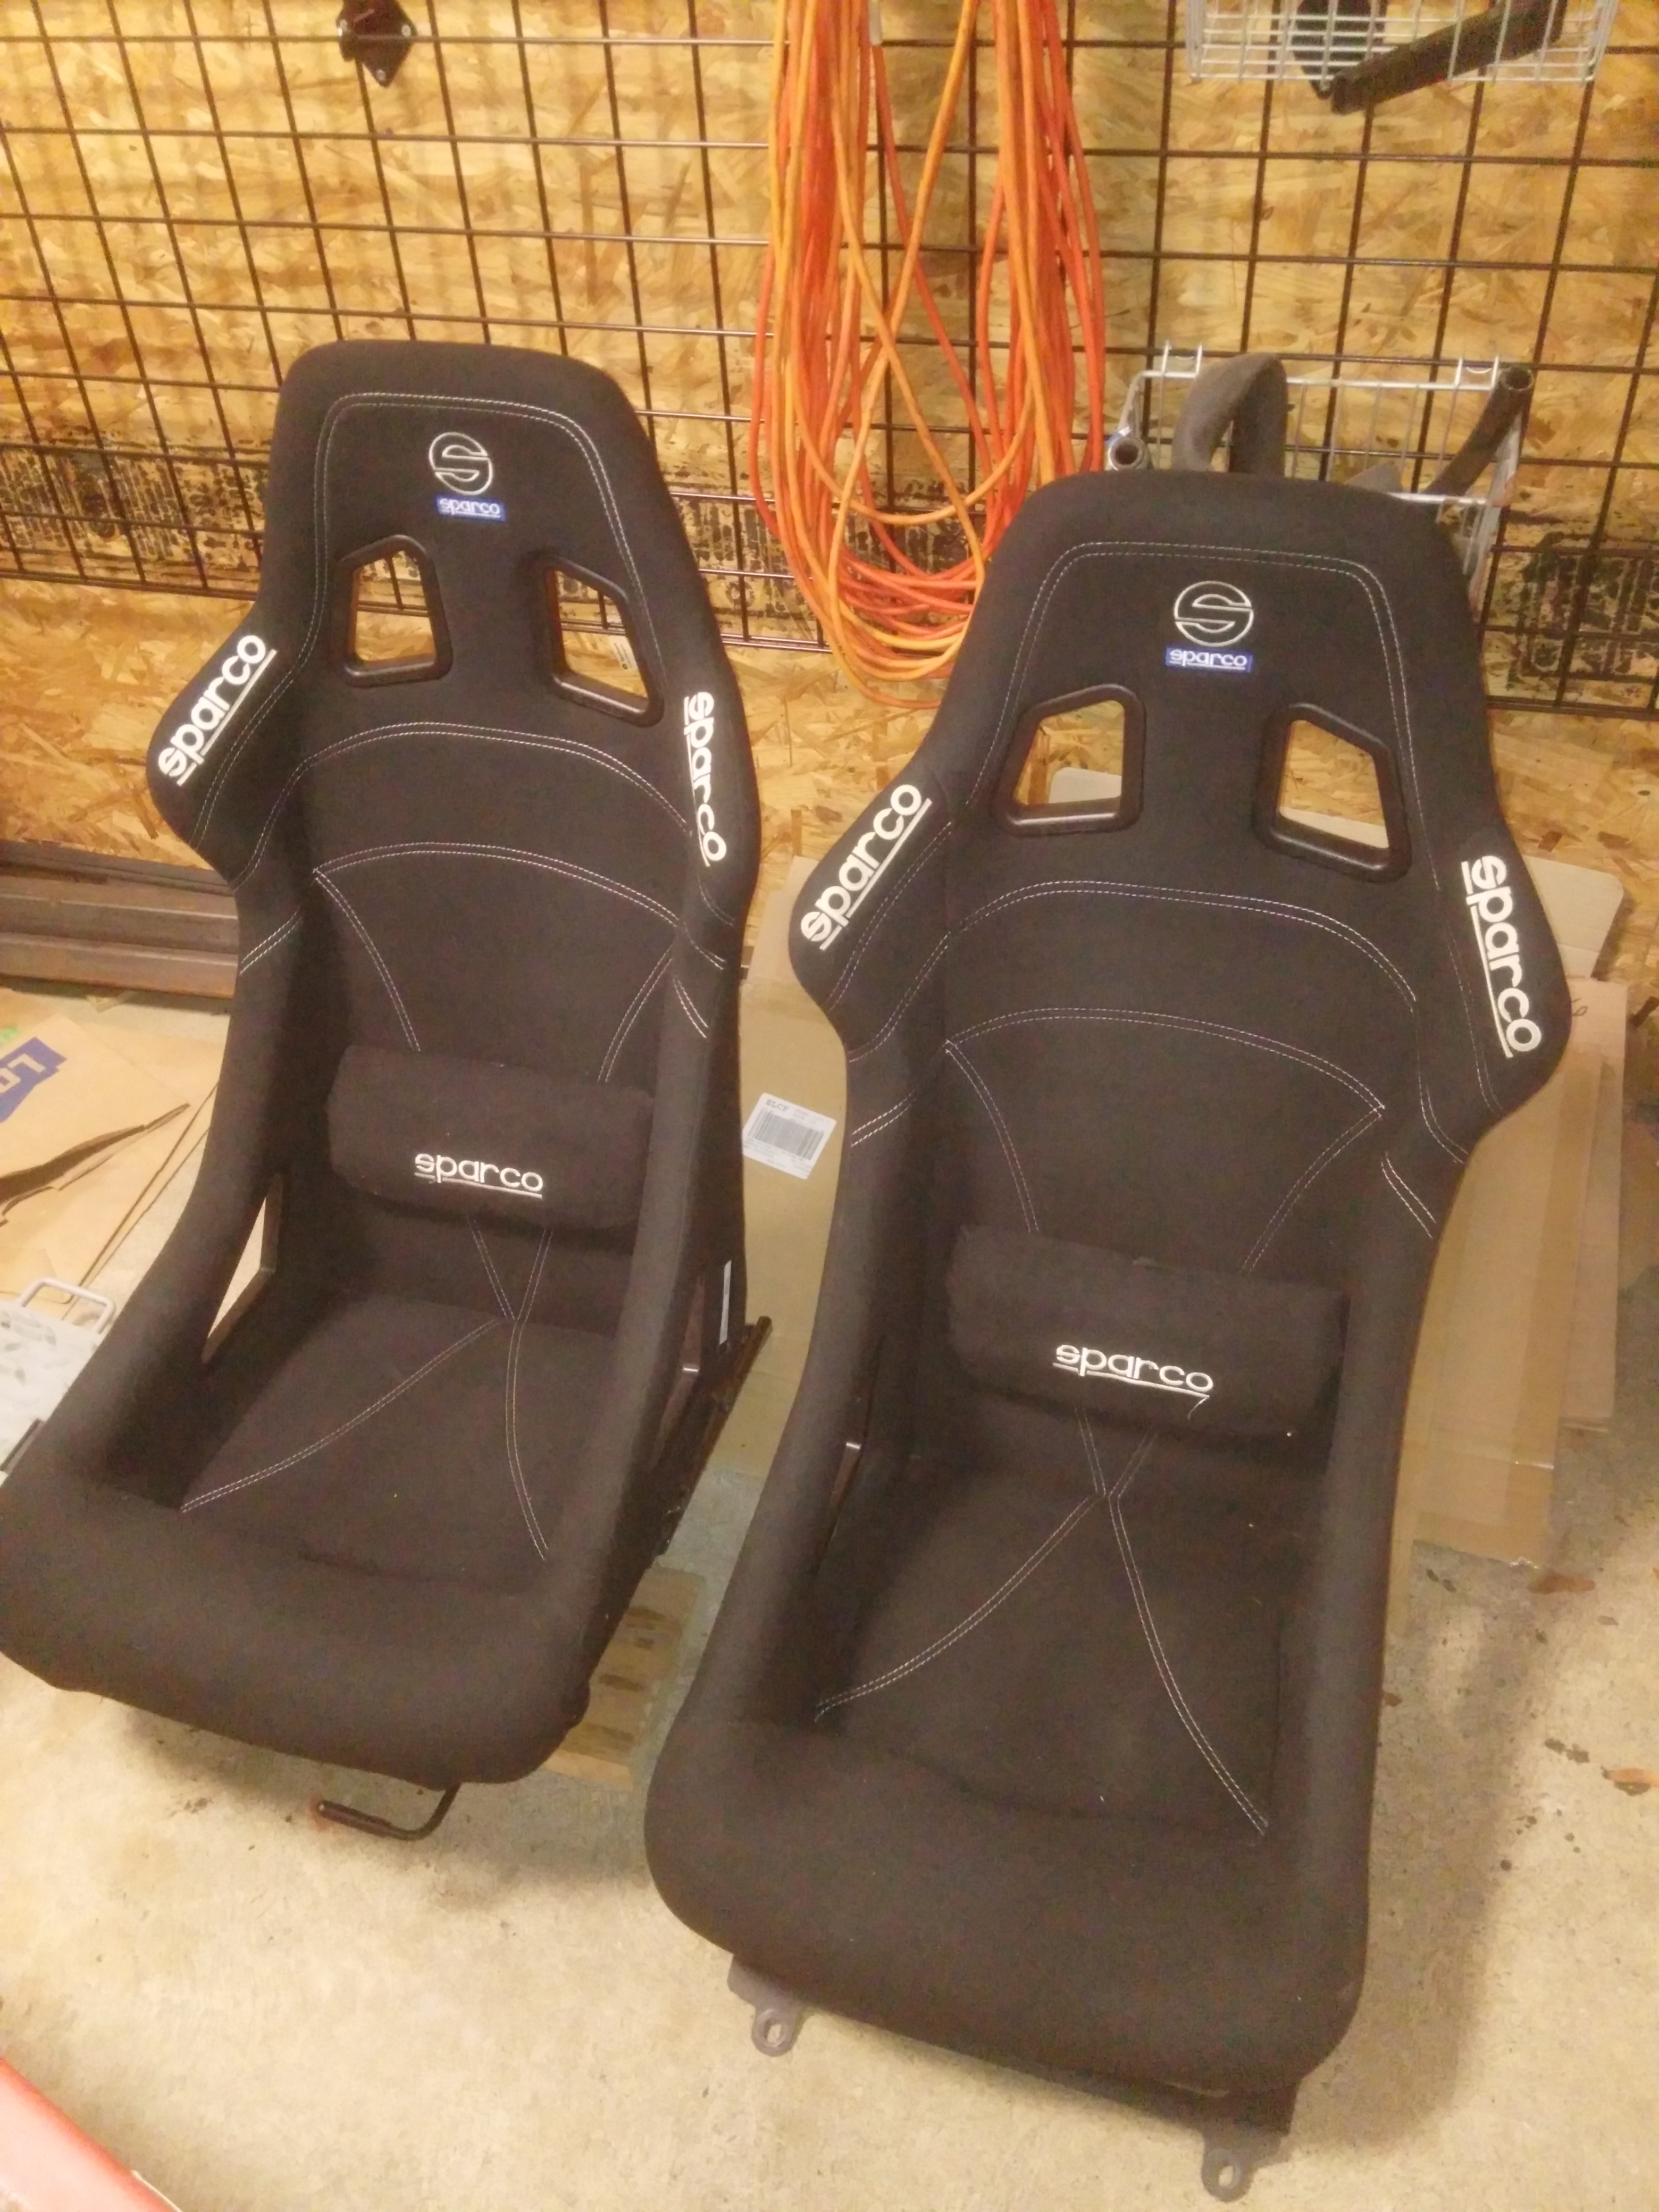 Sparco Seat Leg Cushion — Track First